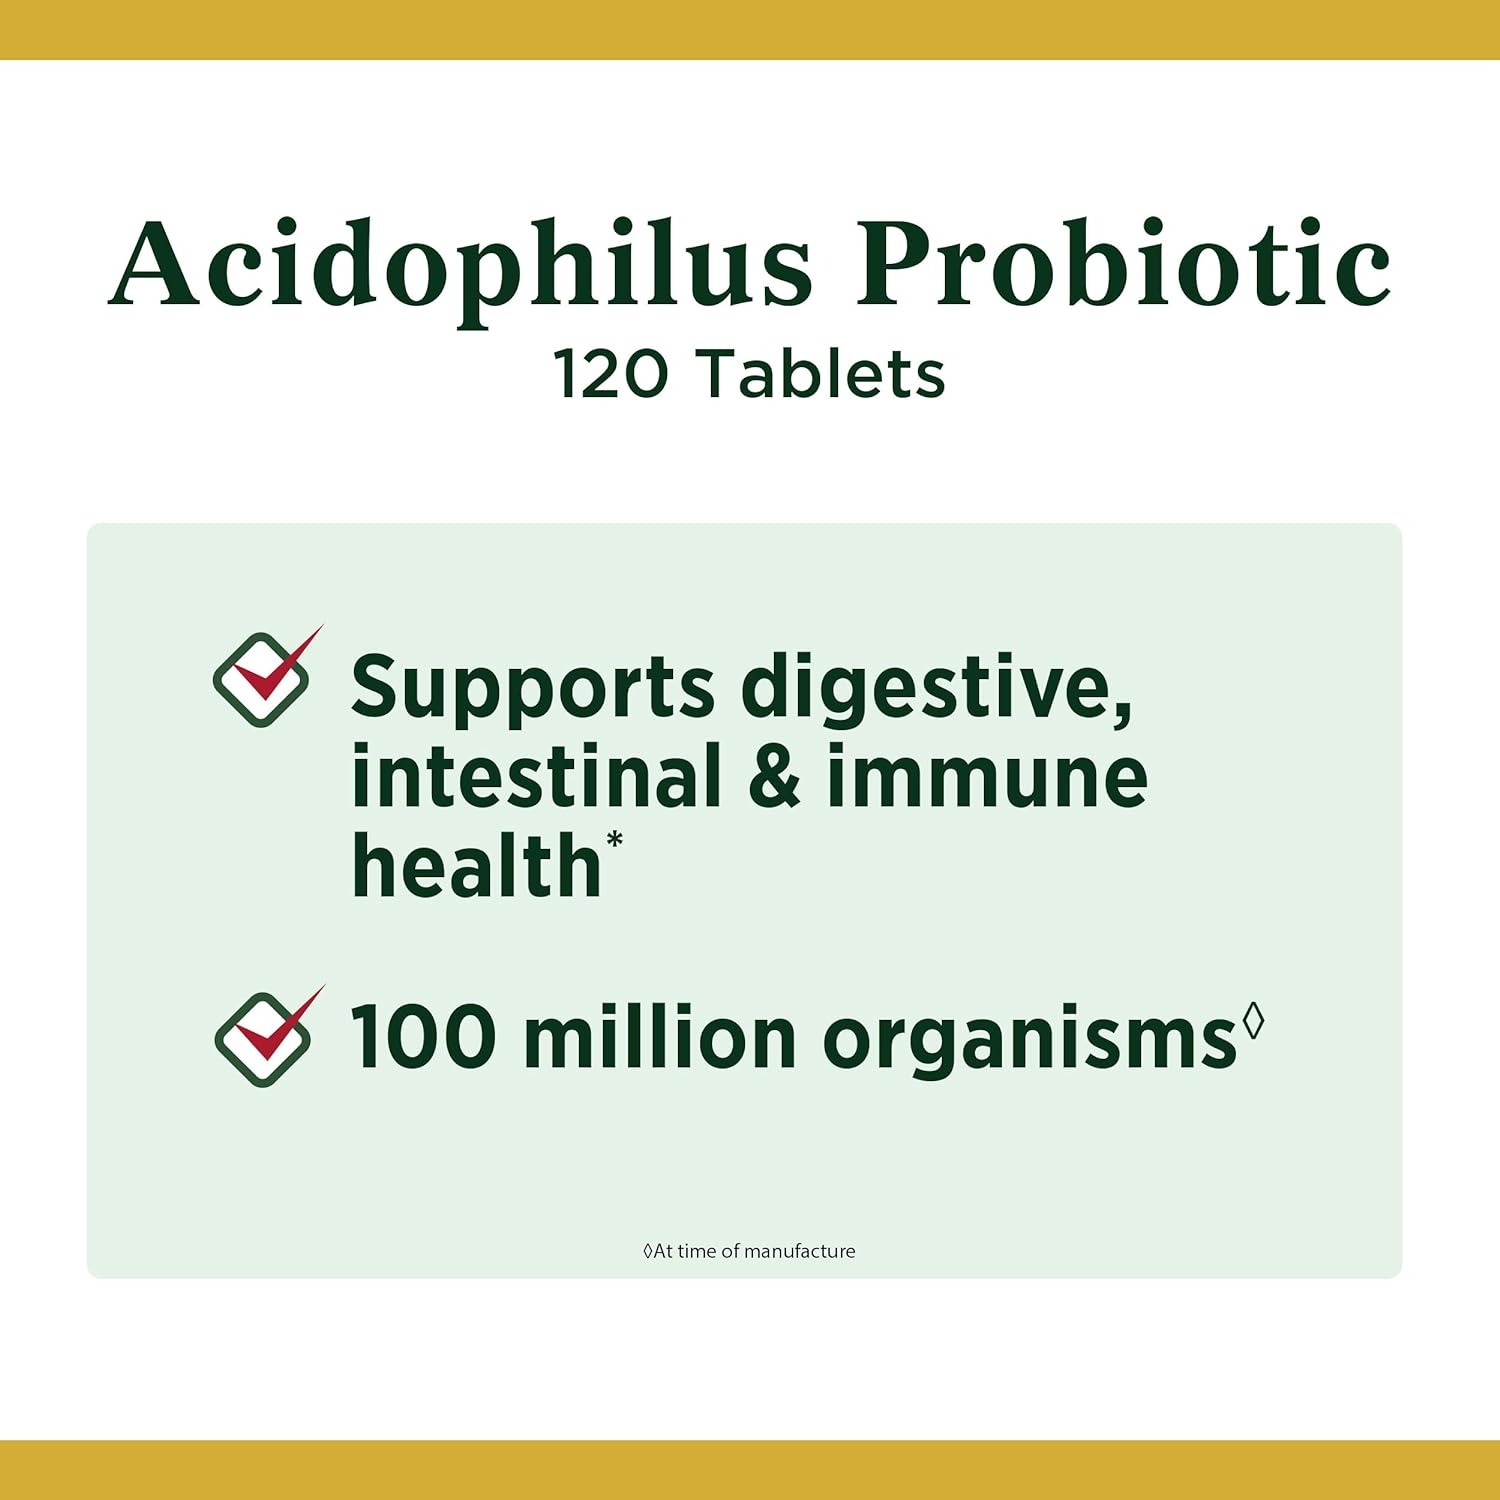 Nature's Bounty Probiotic Acidophilus Tablets, 120 ea (Pack of 5)